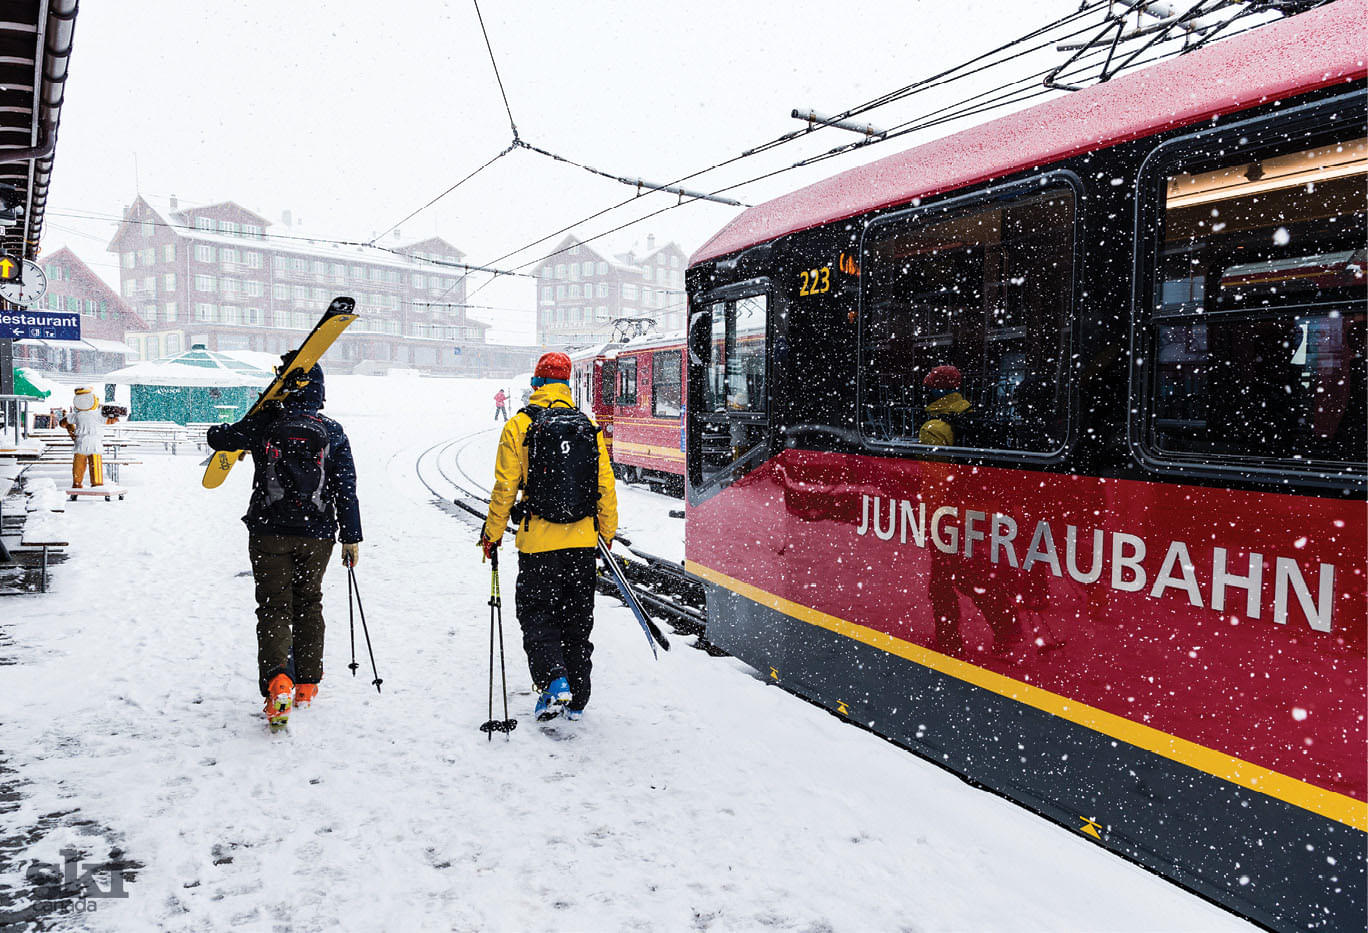 Take the cogwheel train to Jungfrau summit